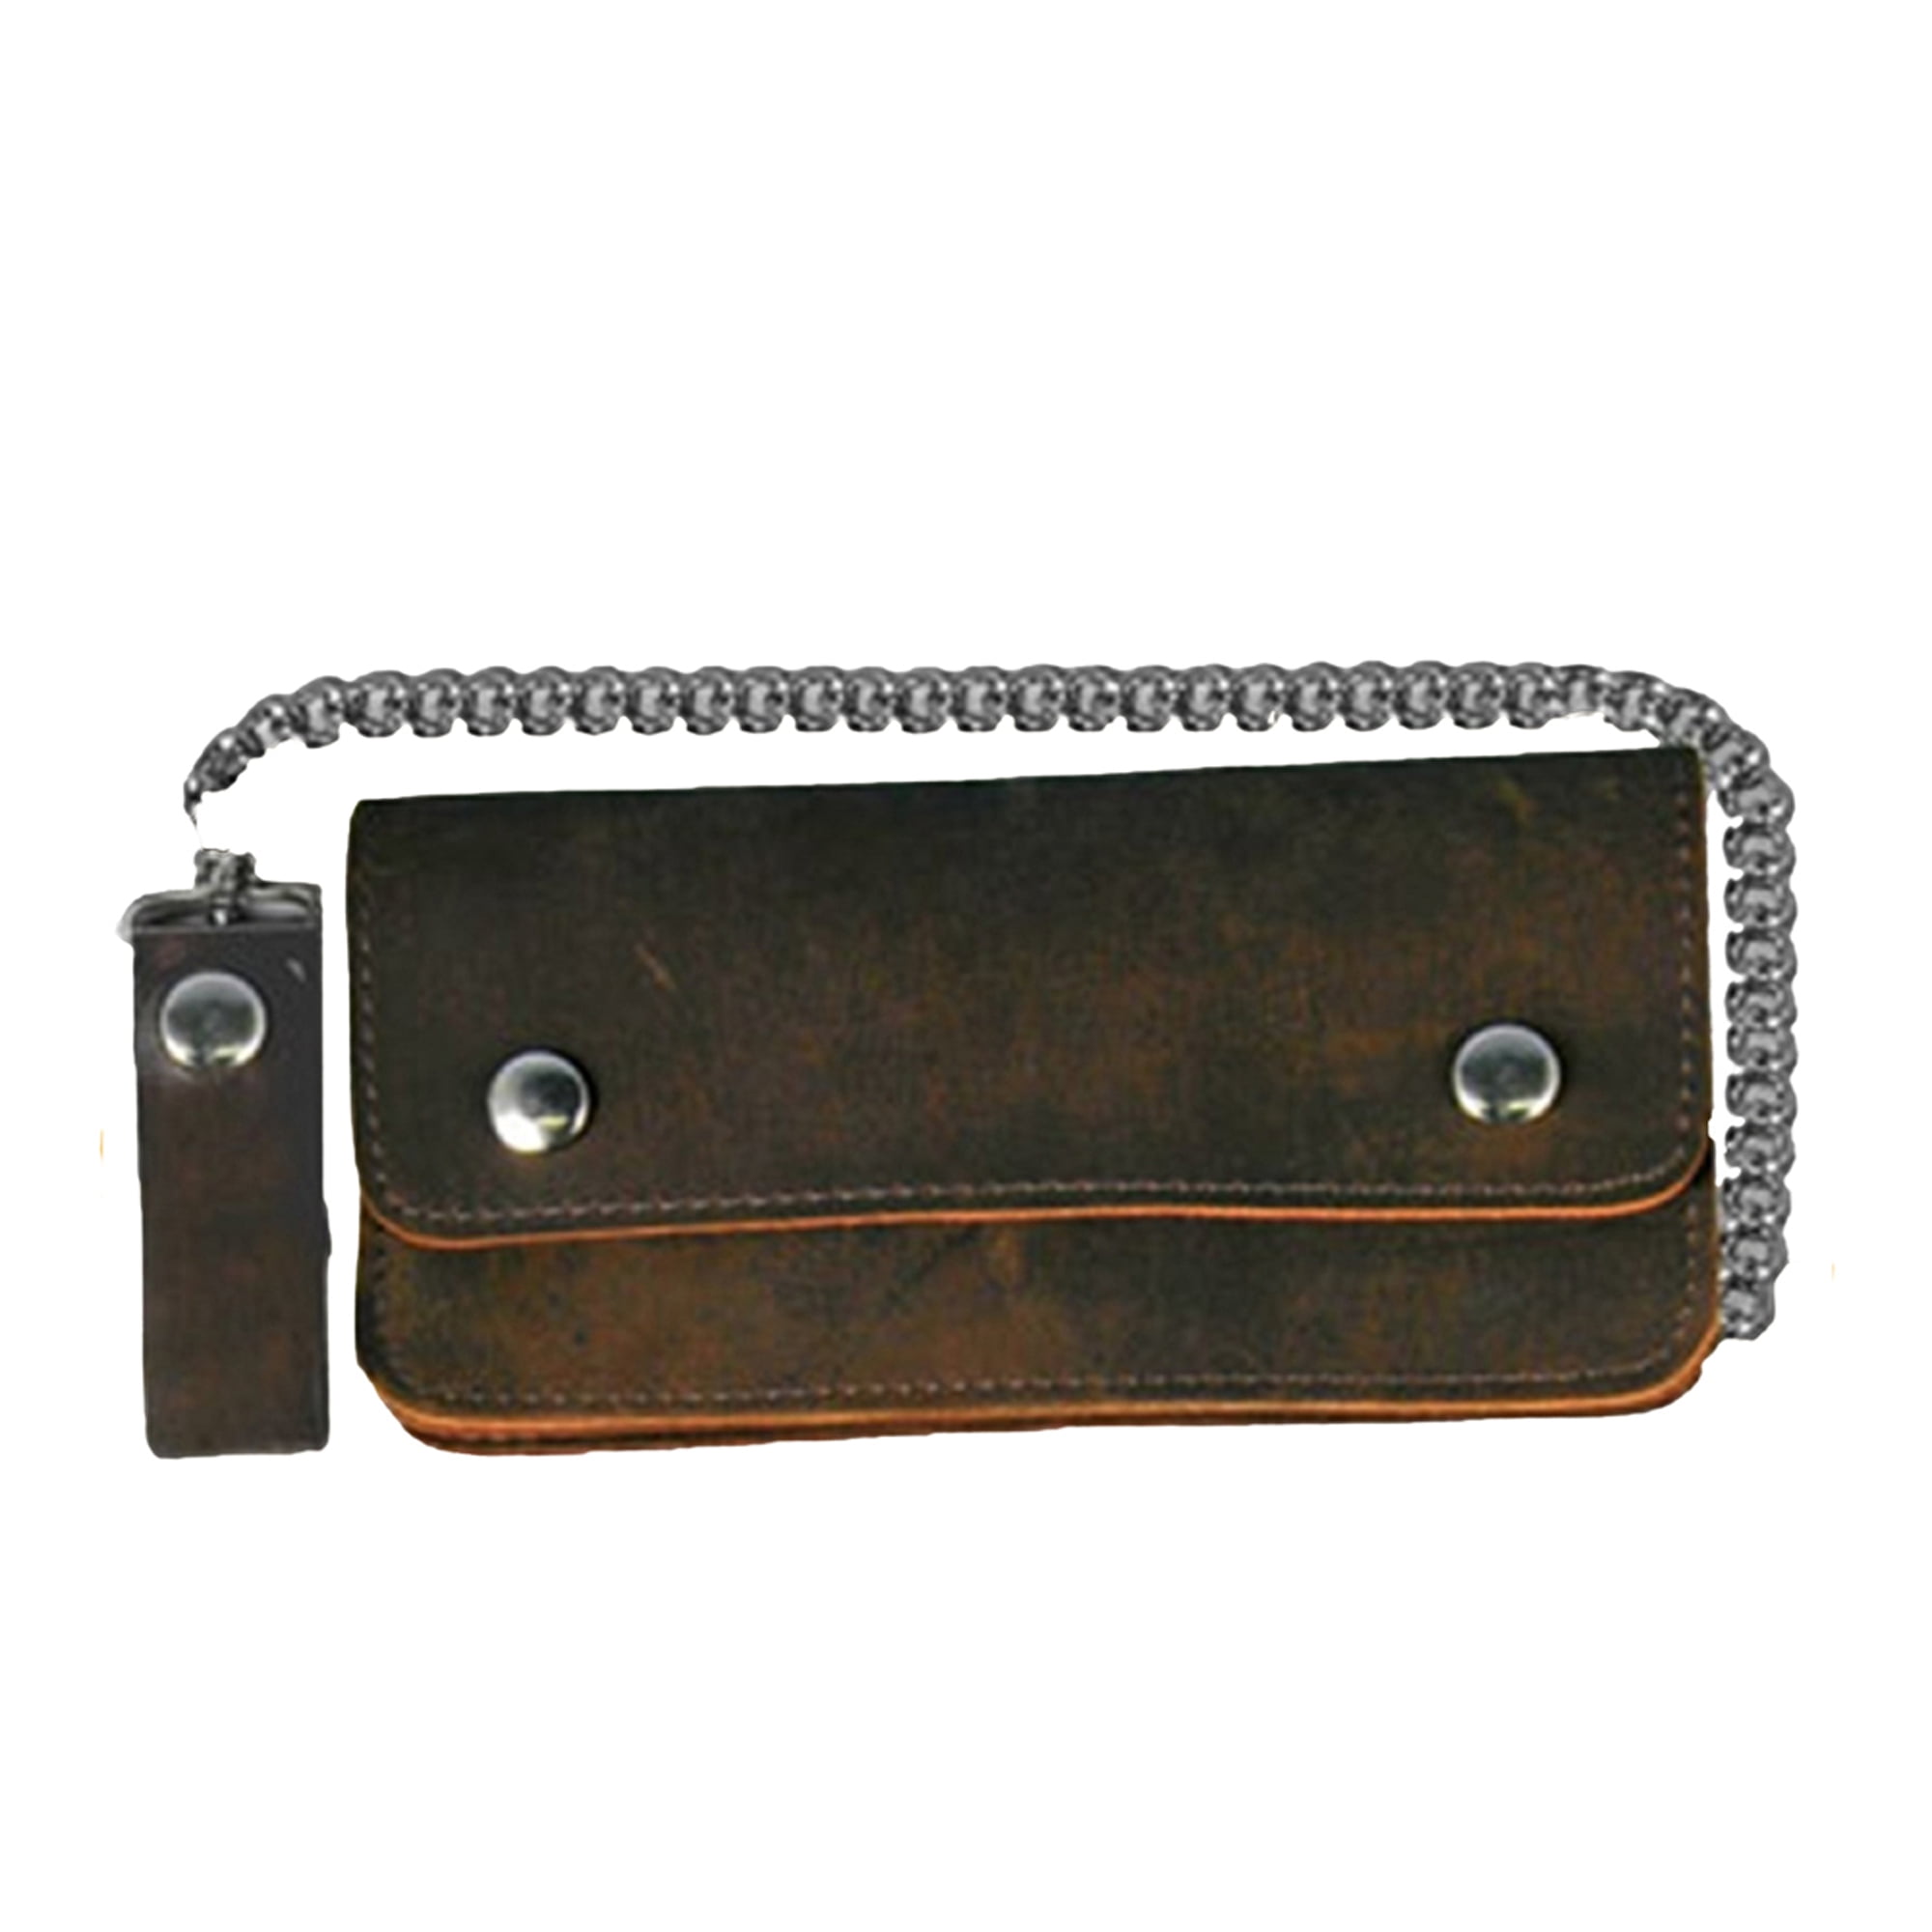 Trucker wallet 12 chain 10 credit card slots Brown leather 8 Biker